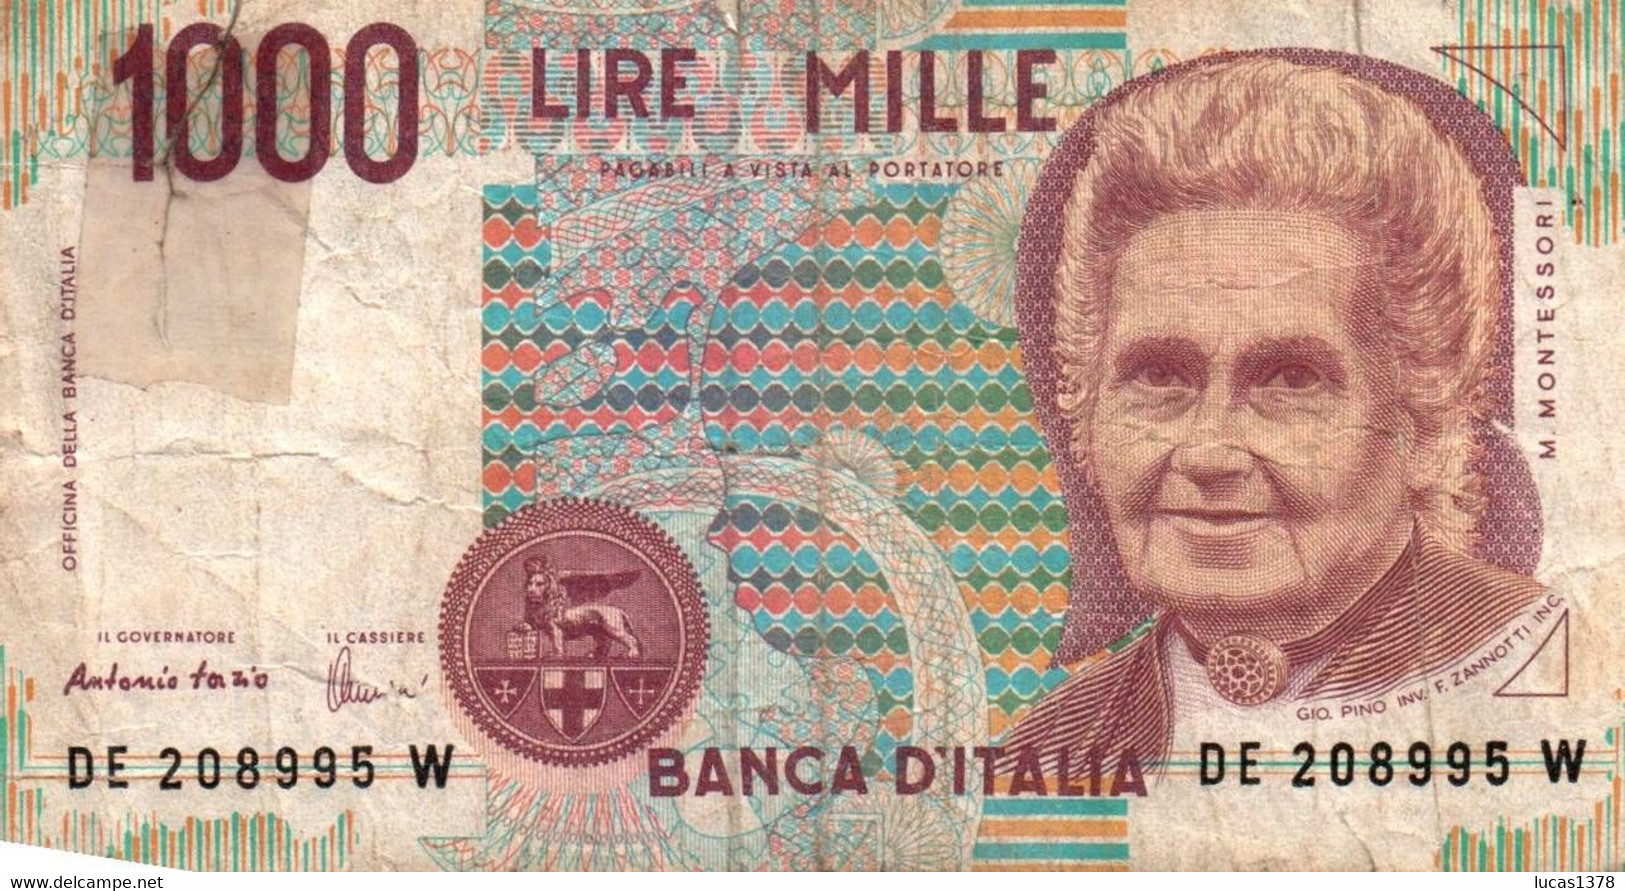 4 BILLETS 1000 lire "Montessori"